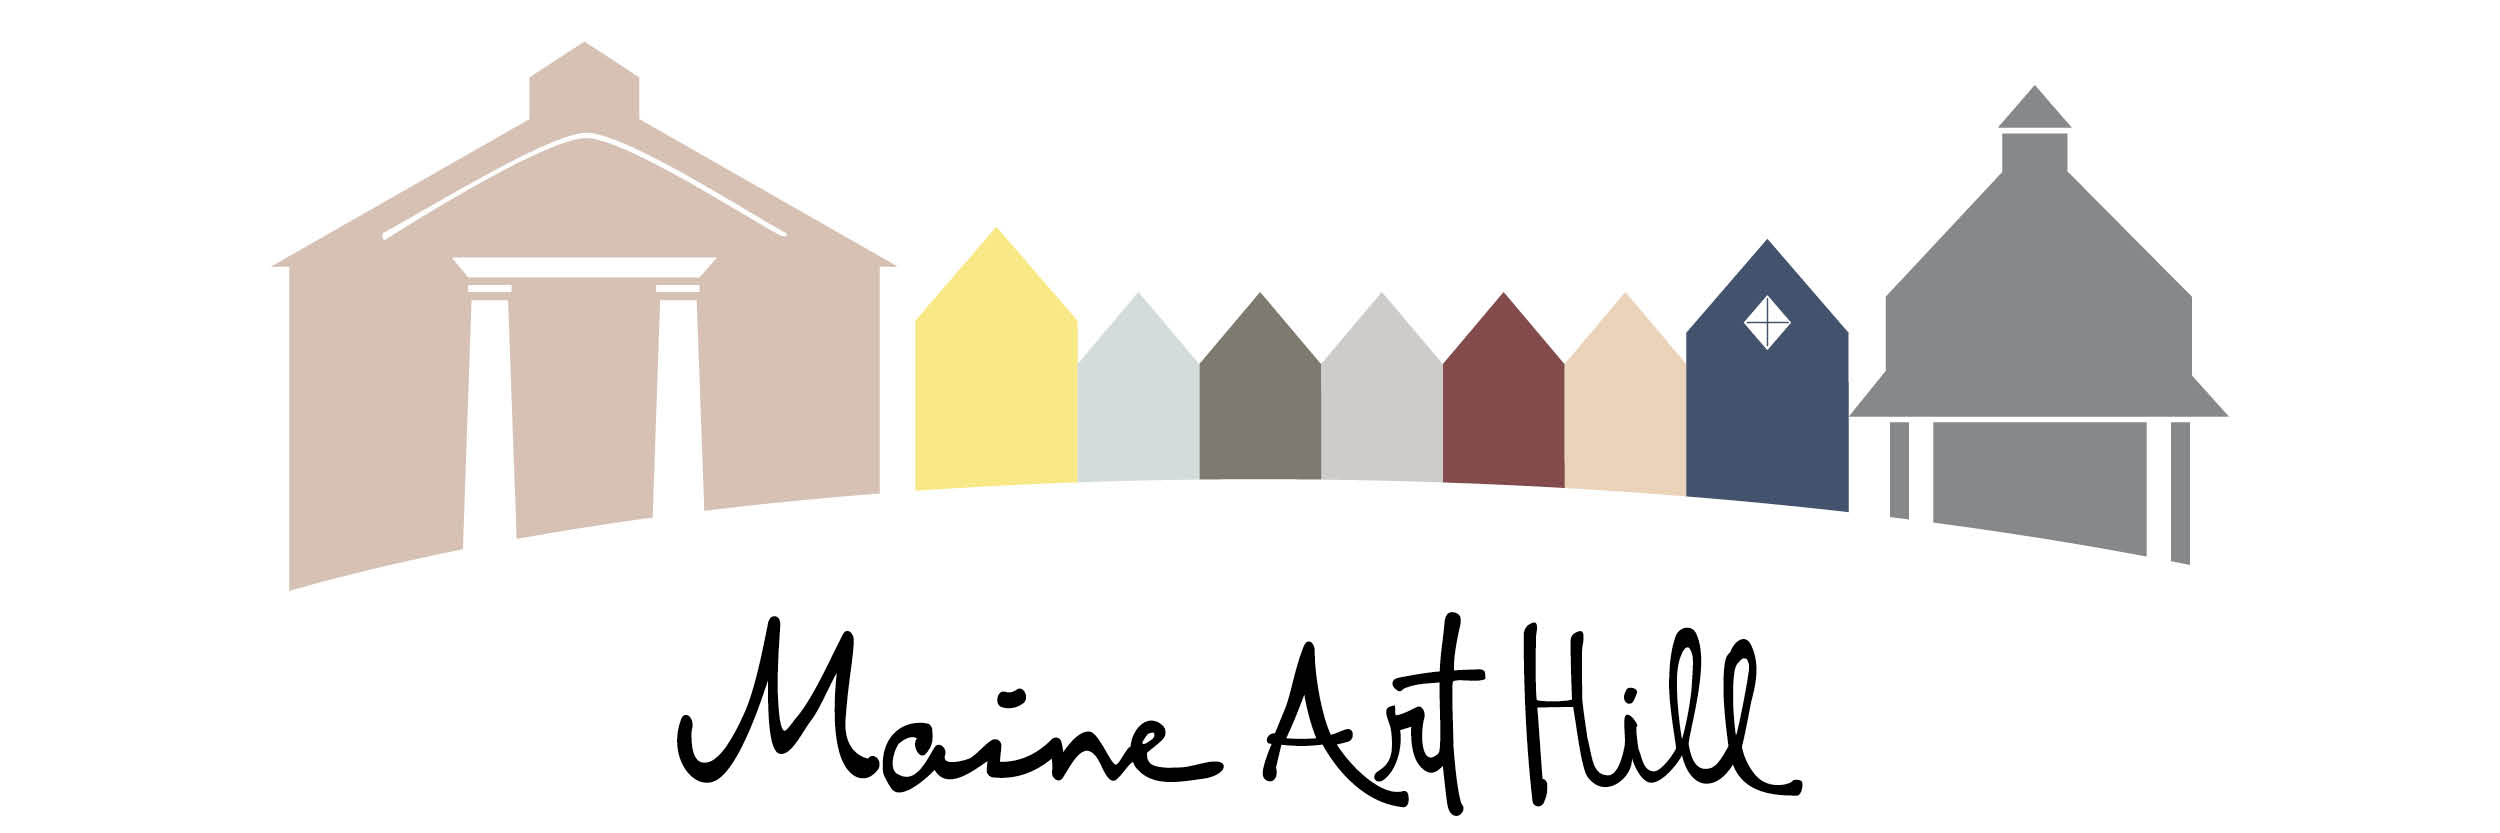 Maine Art Hill 